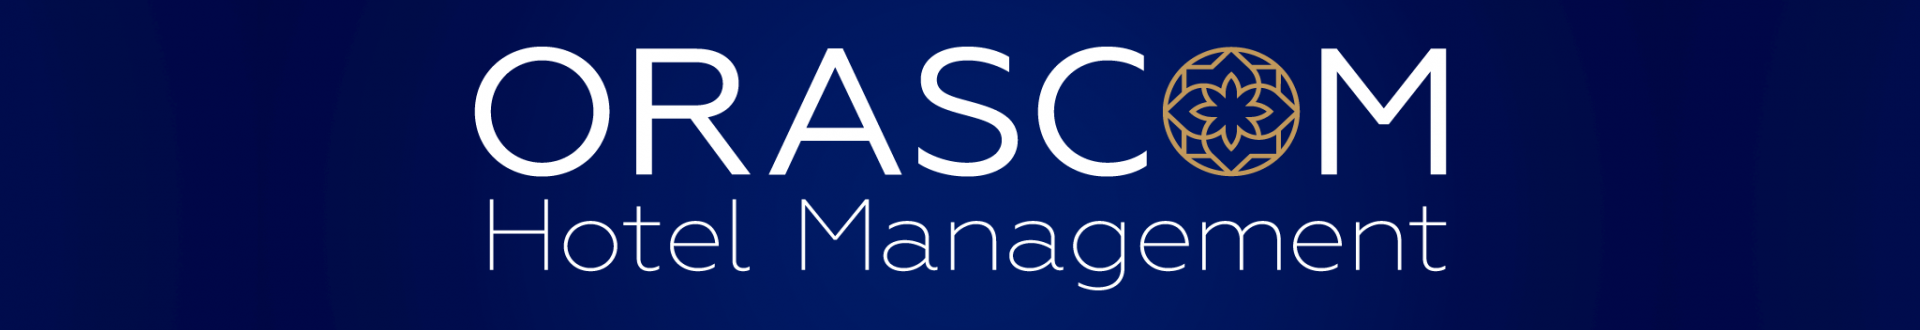 Orascom Hotels Management